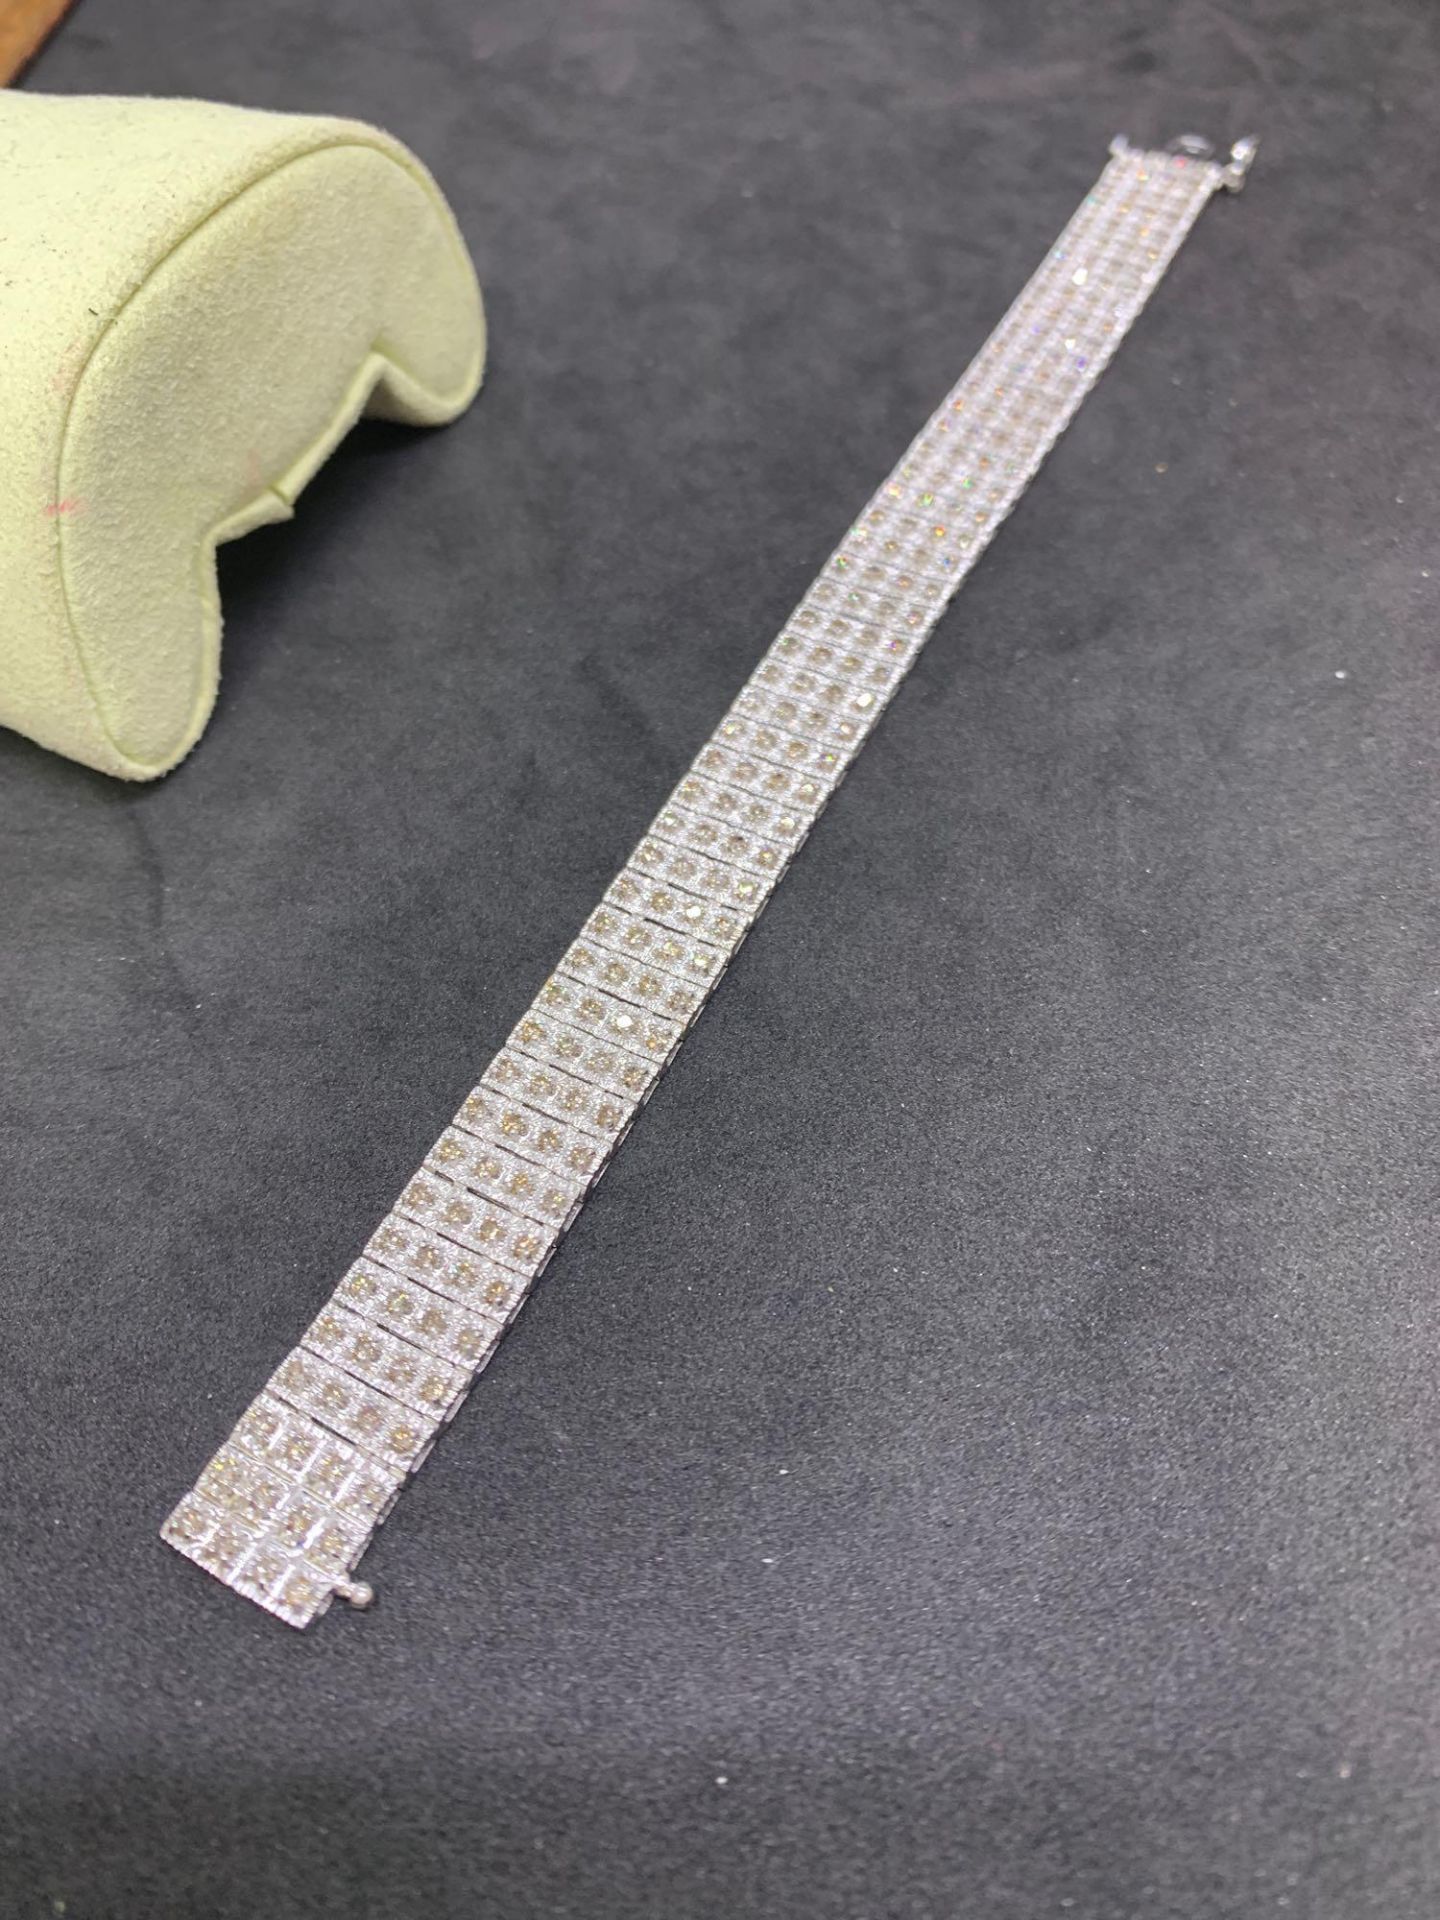 9 carat white gold diamond bracelet weighs 23 g